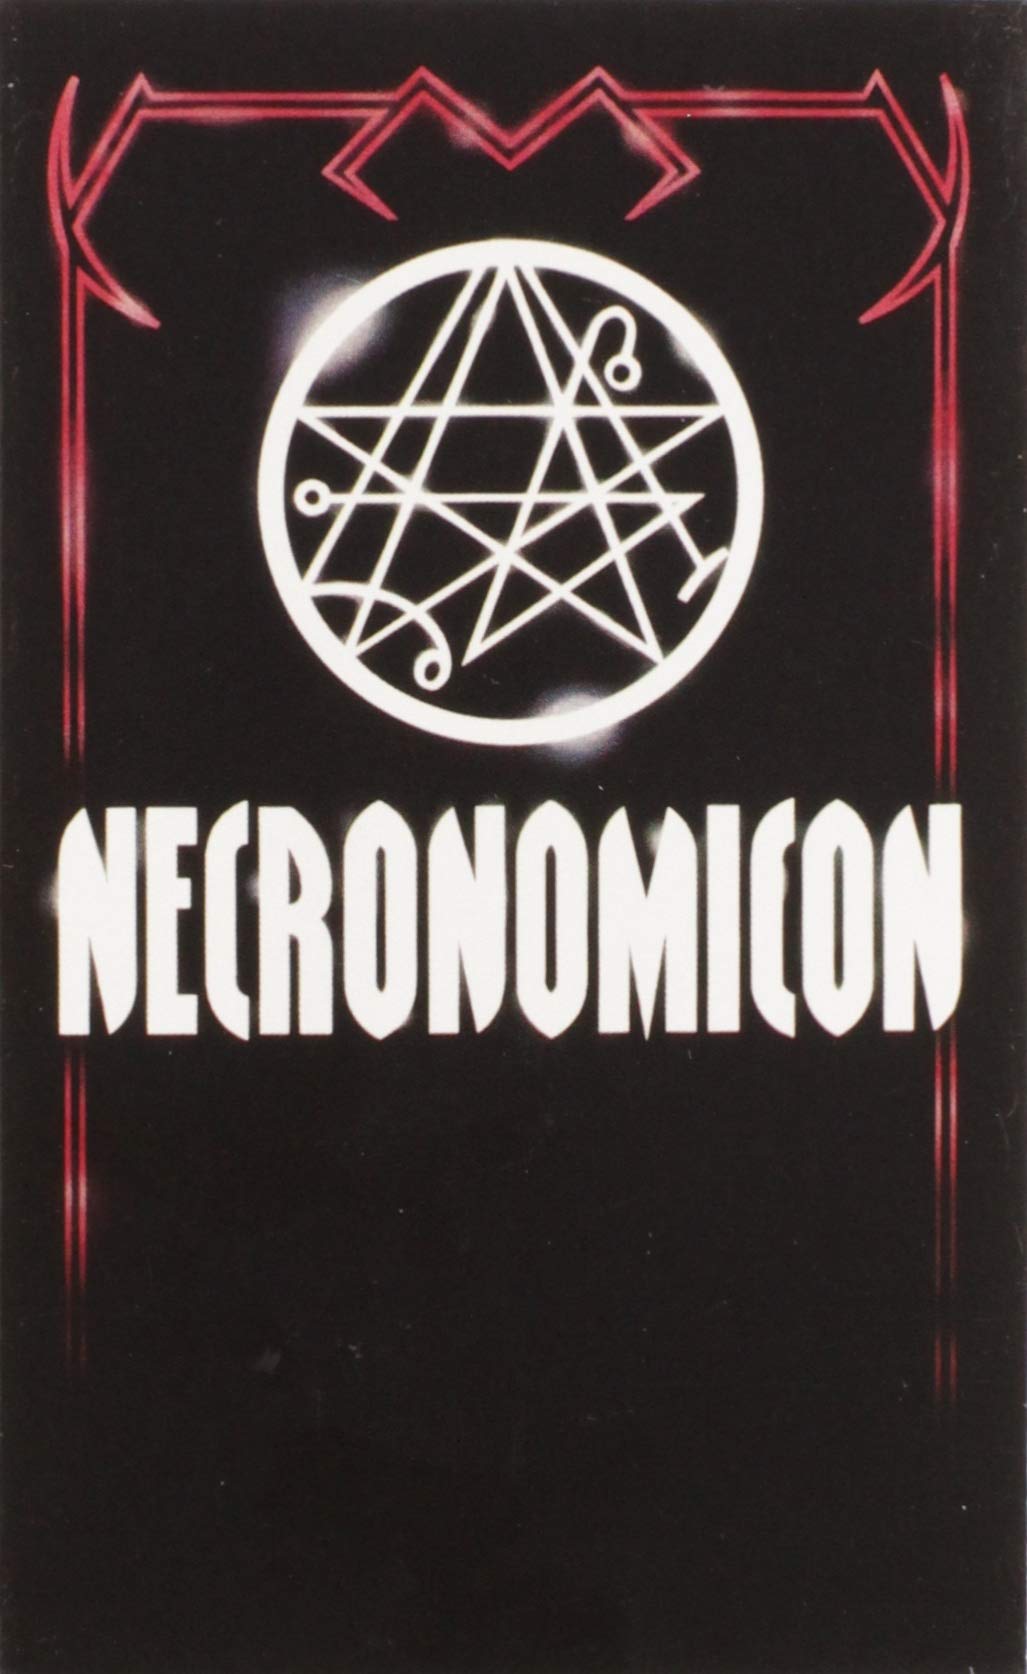 The Necronomicon, by Simon